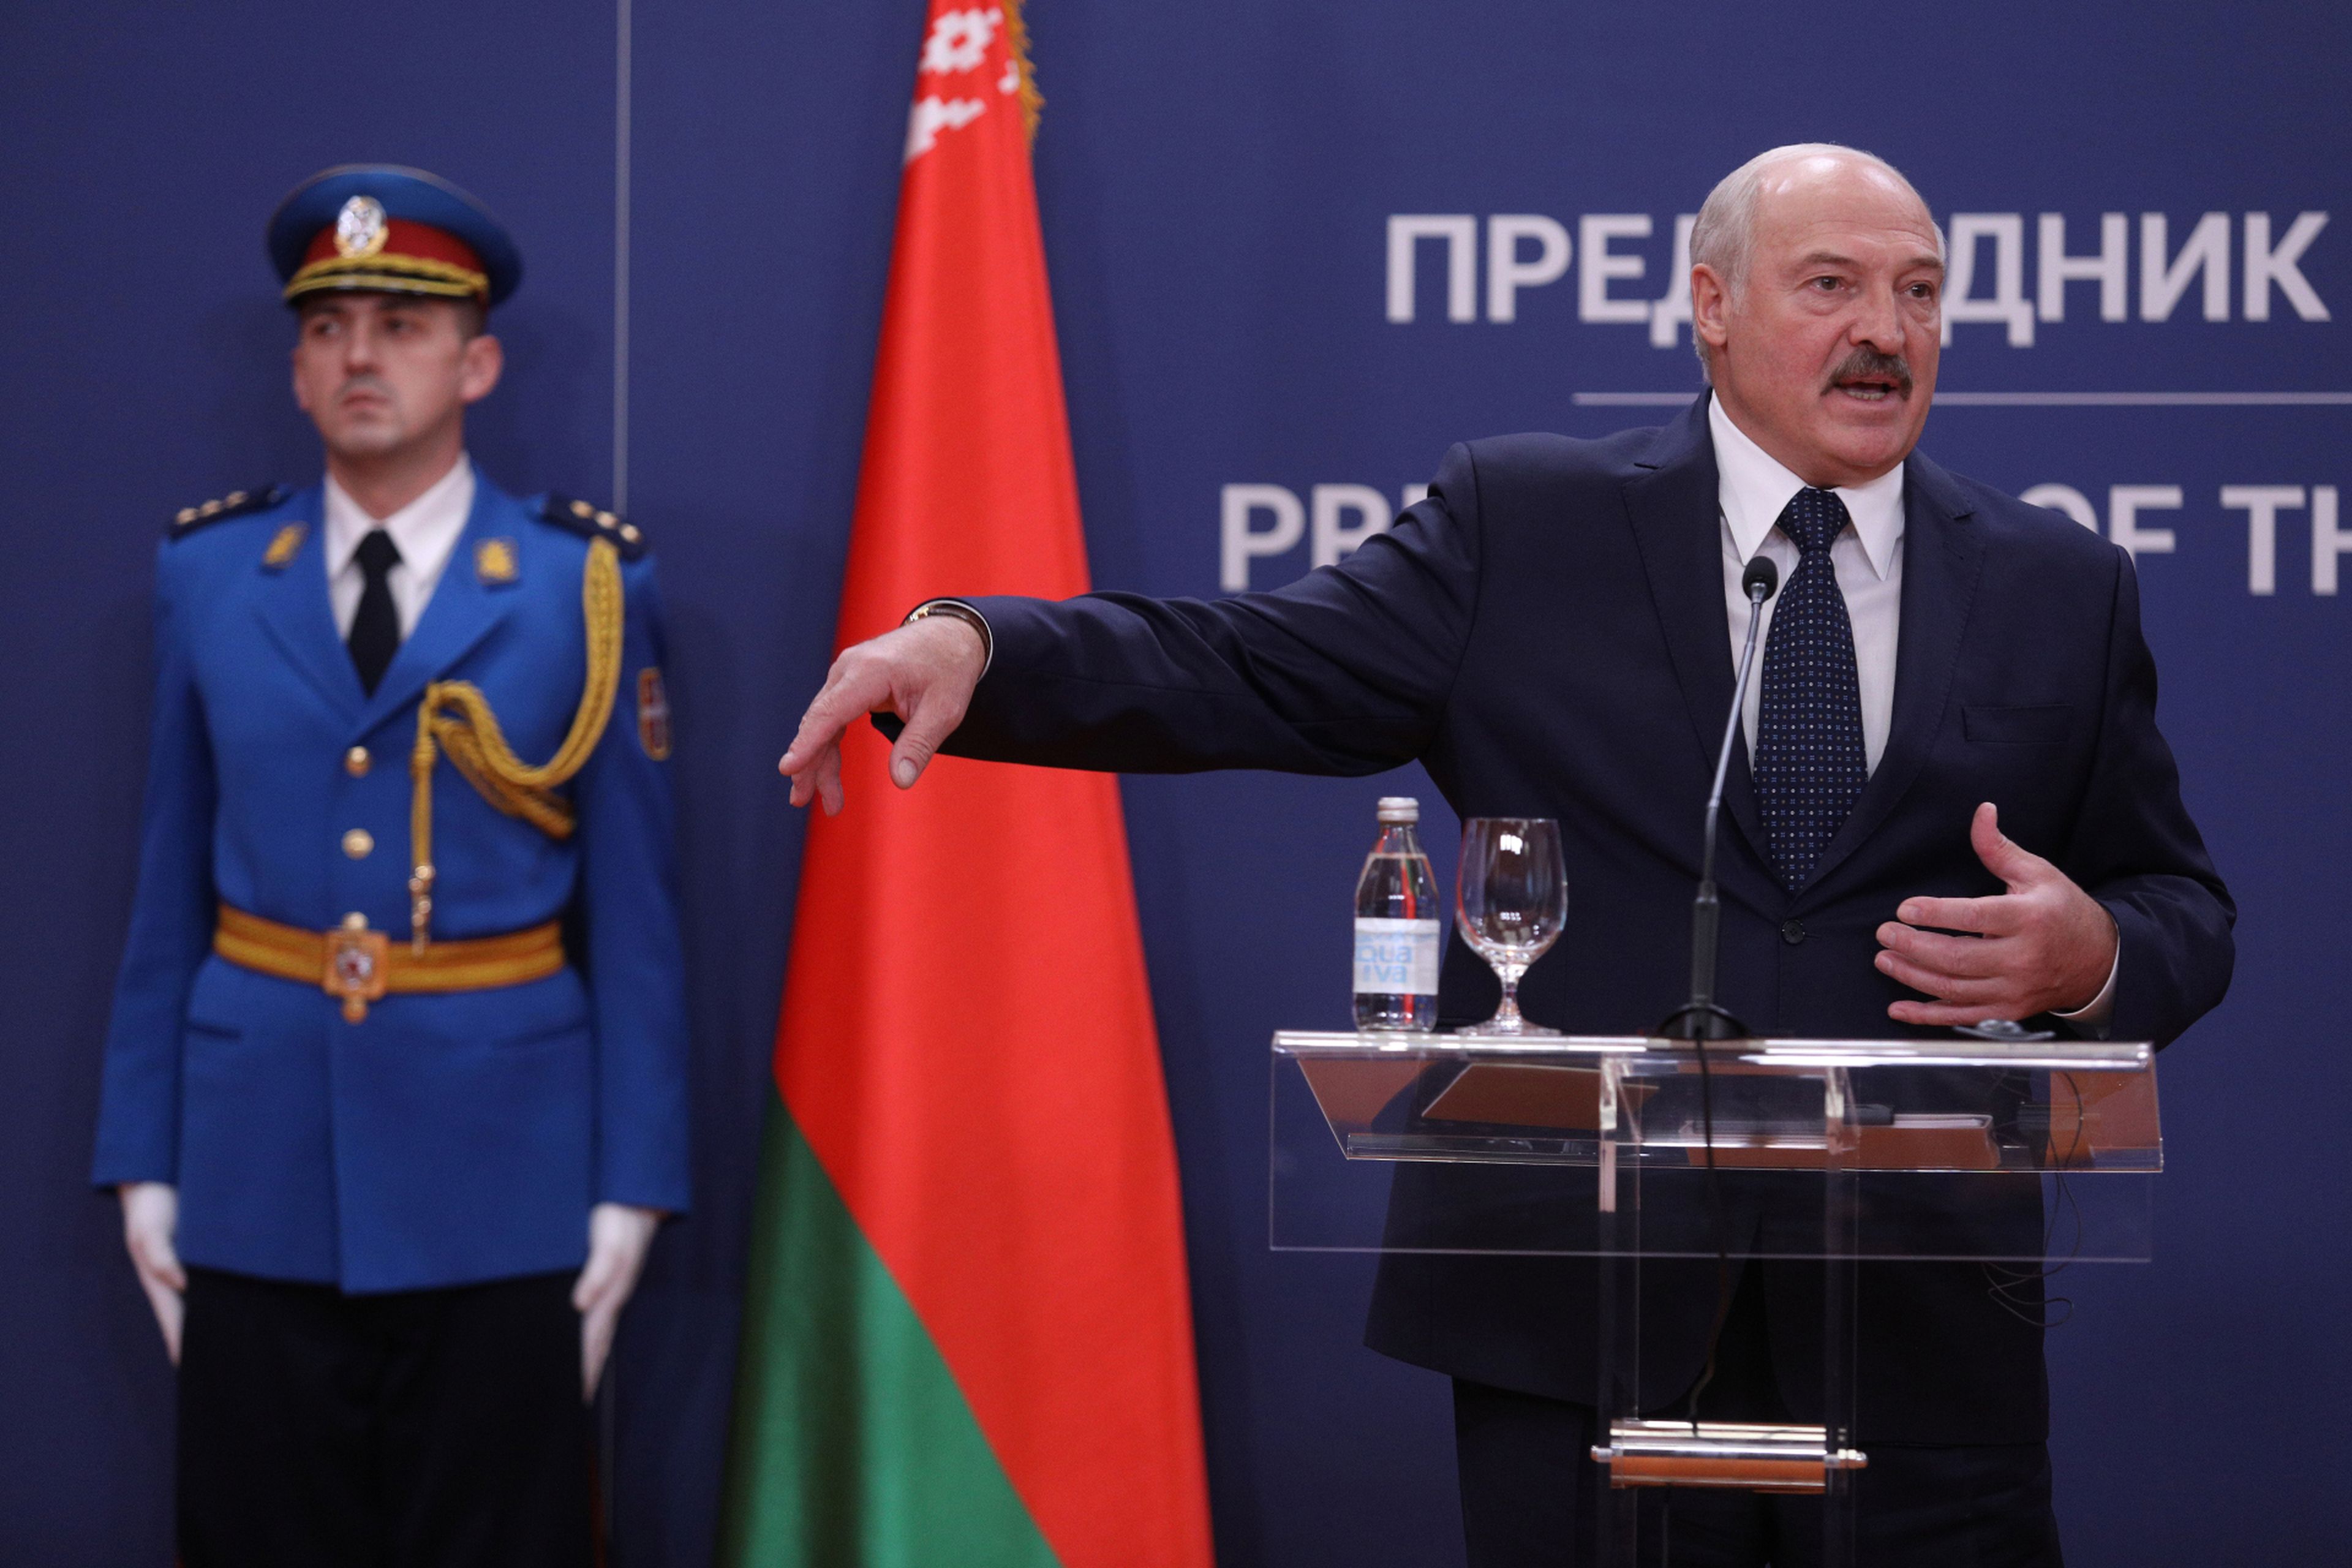 El presidente bielorruso, Aleksandr Lukashenko.